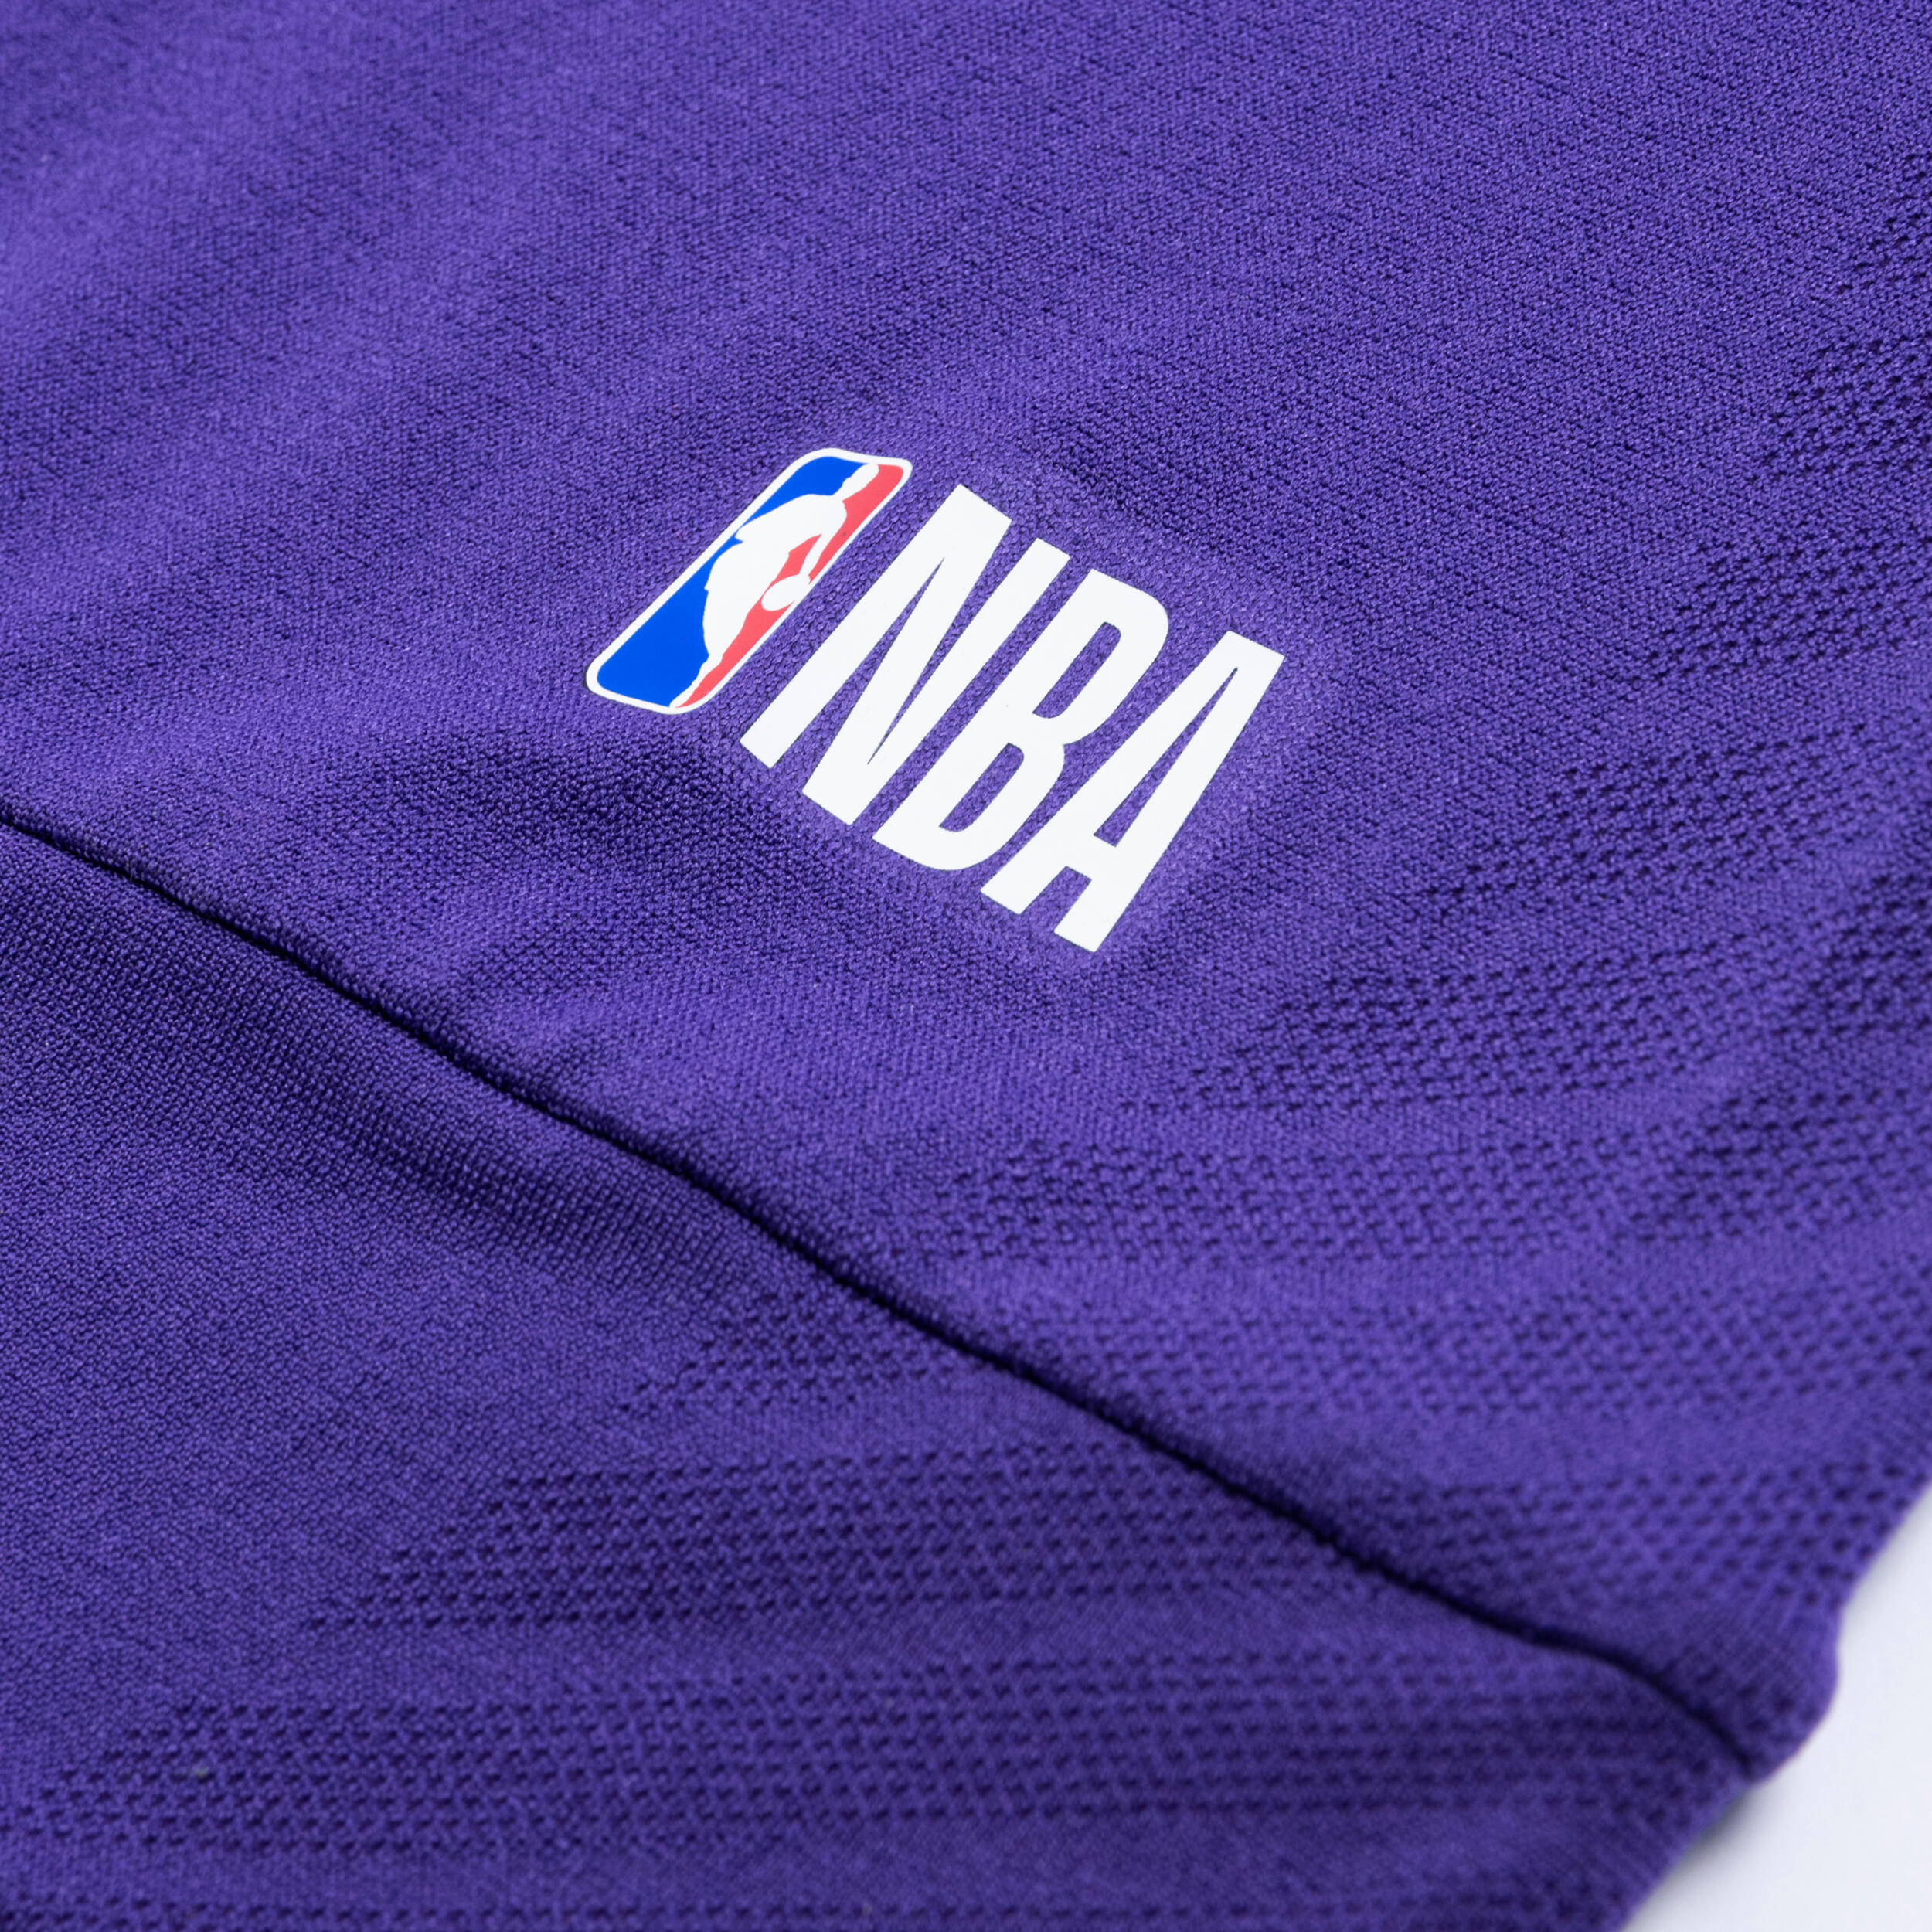 Men's/Women's Basketball Base Layer Jersey UT500 - NBA Los Angeles Lakers/Purple 3/9